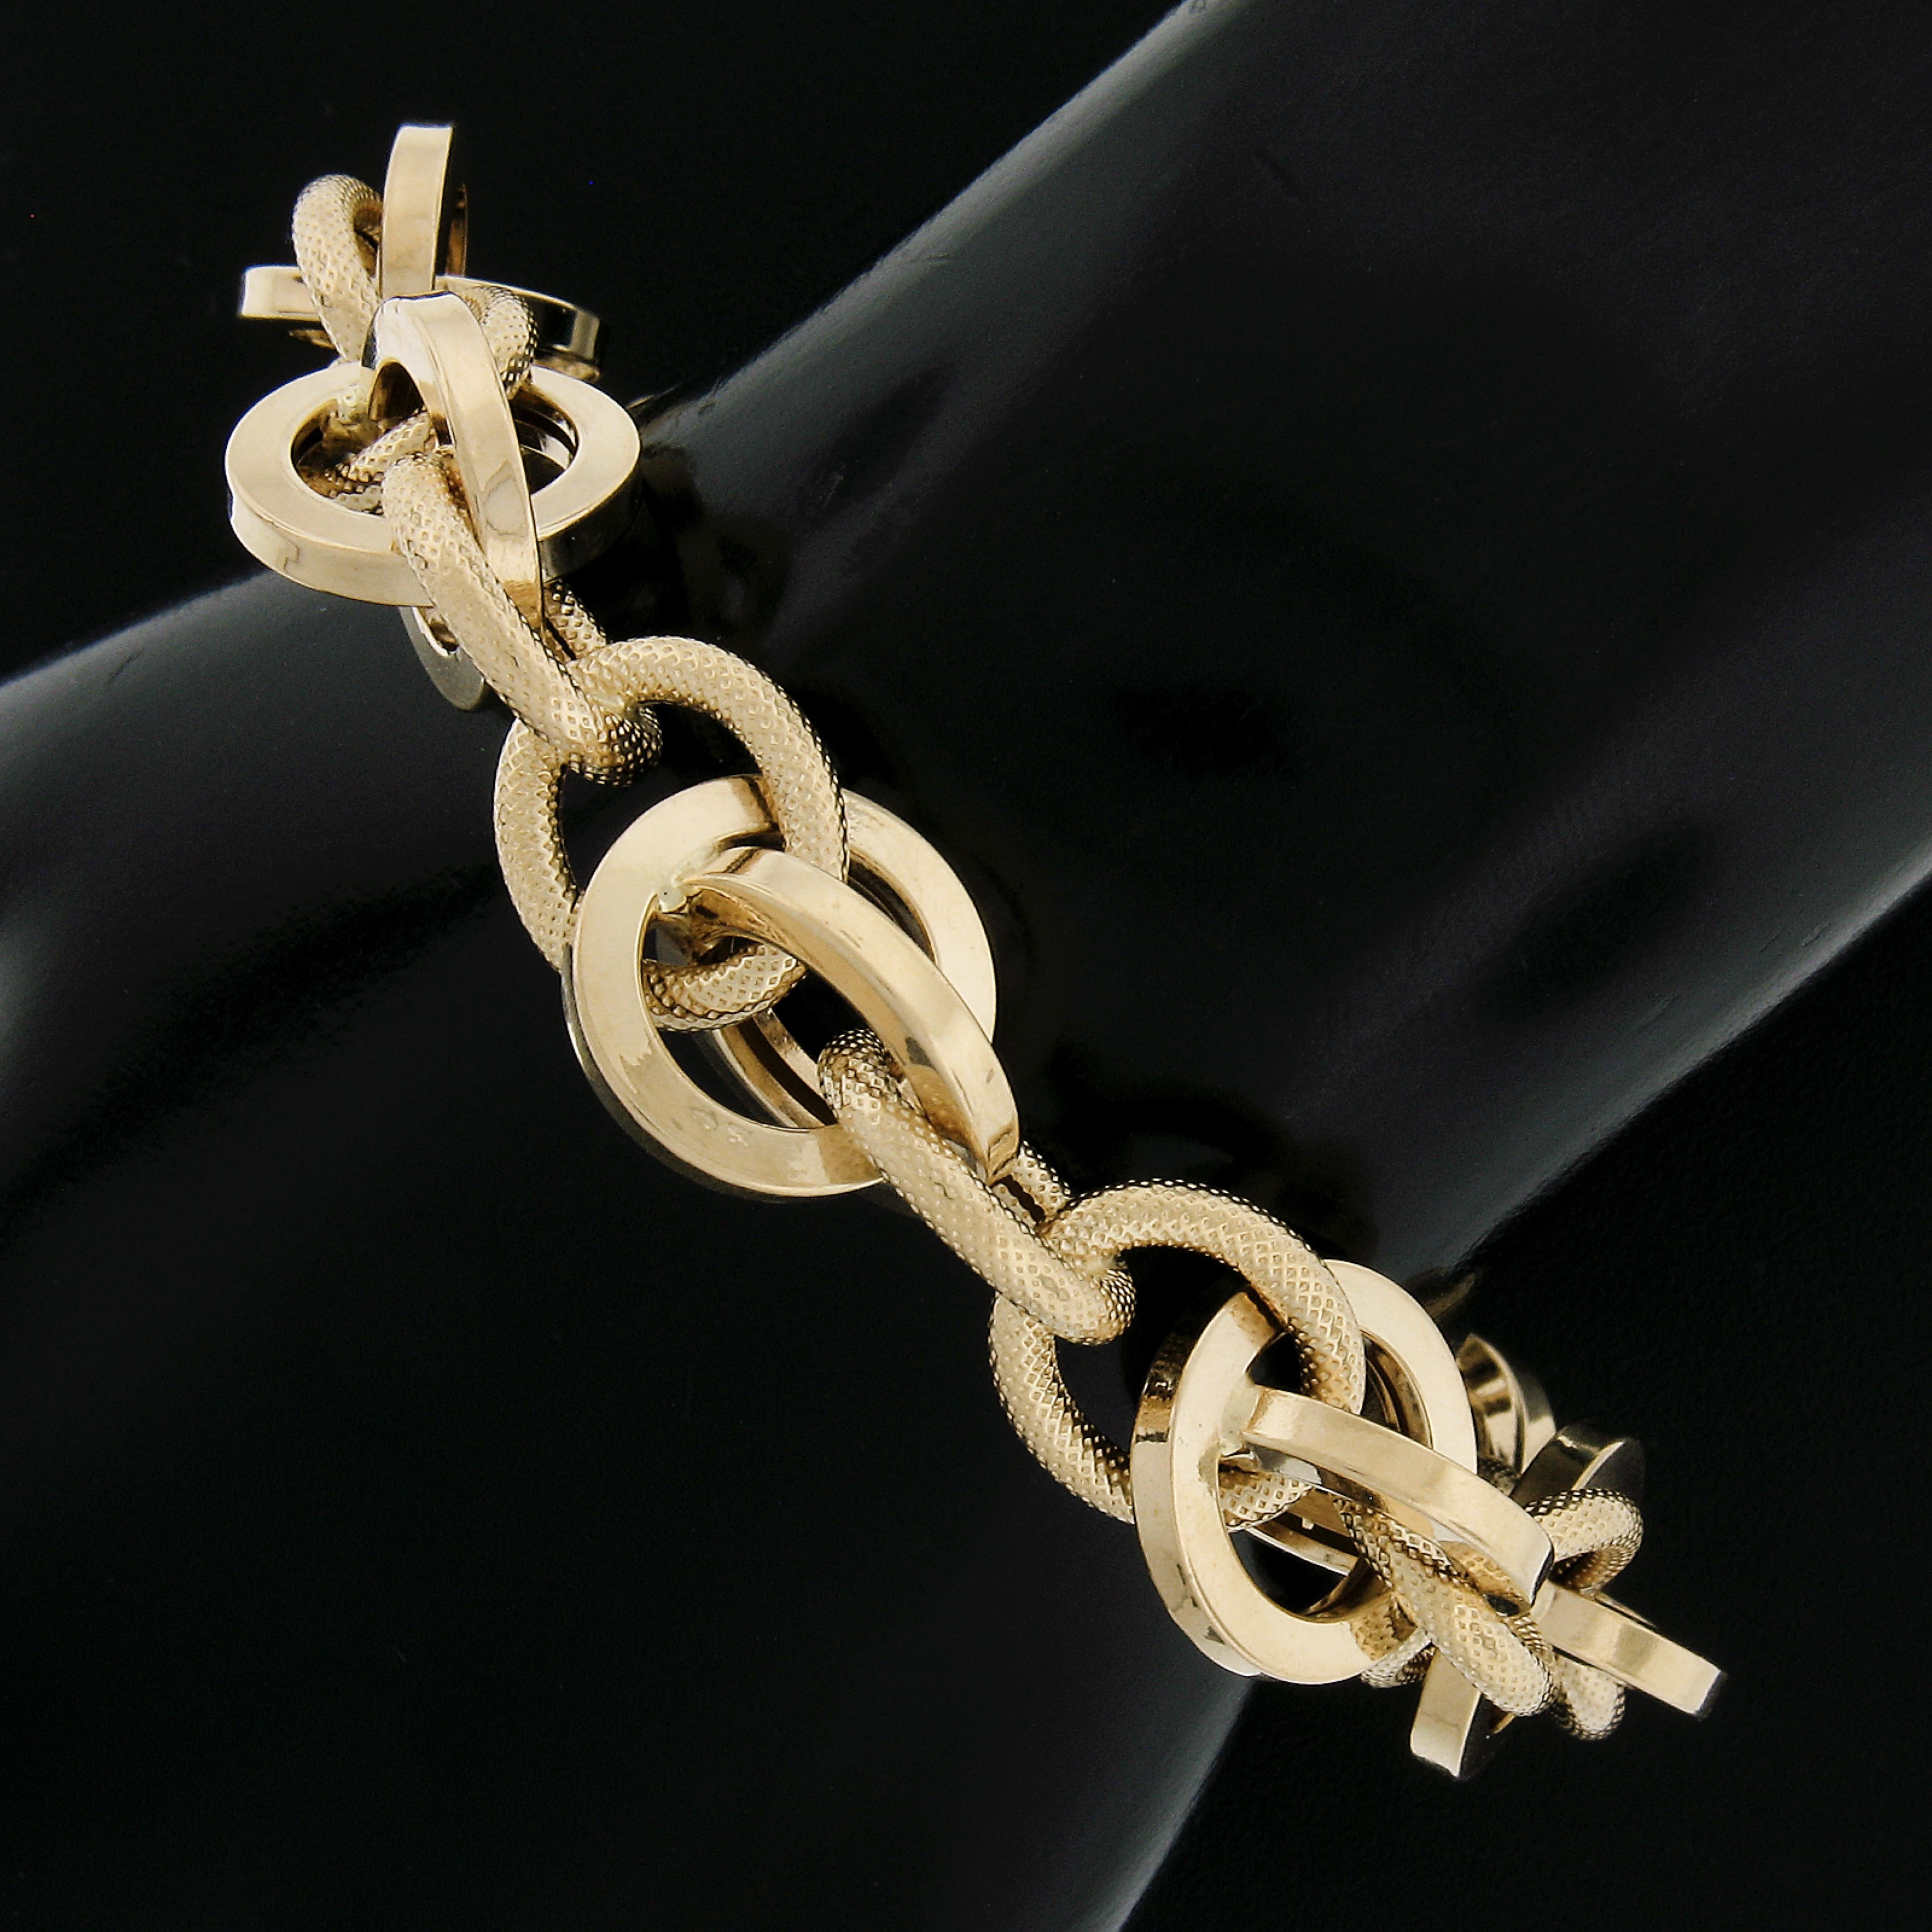 UNOEARRE 18k Gold Textured & Polished Interlocking Round Link Chain Bracelet For Sale 1